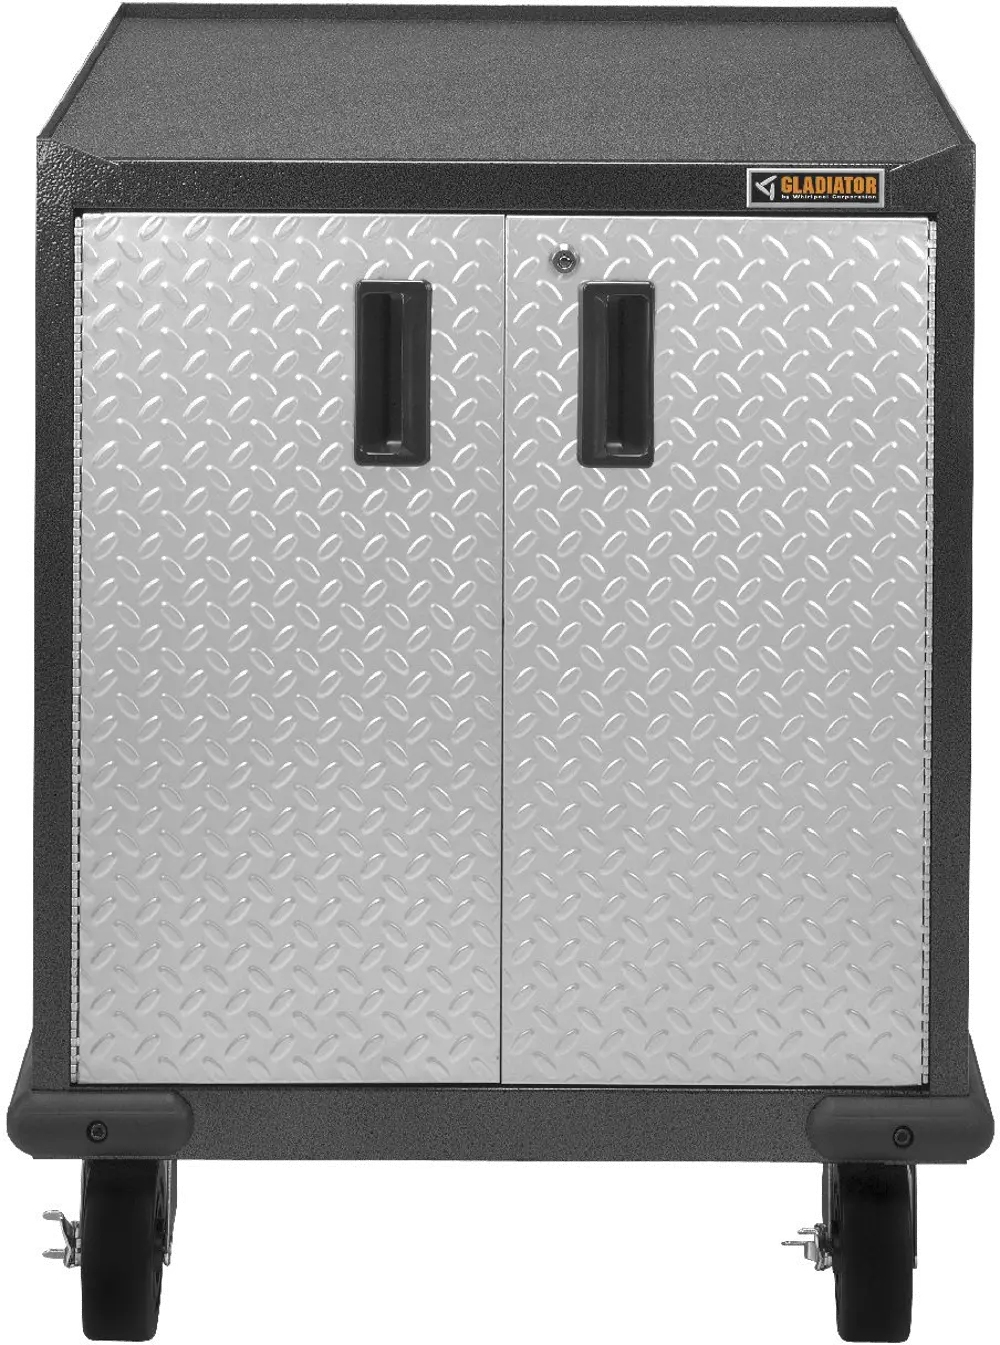 Gladiator Graphite 2-Door Storage Gearbox-1